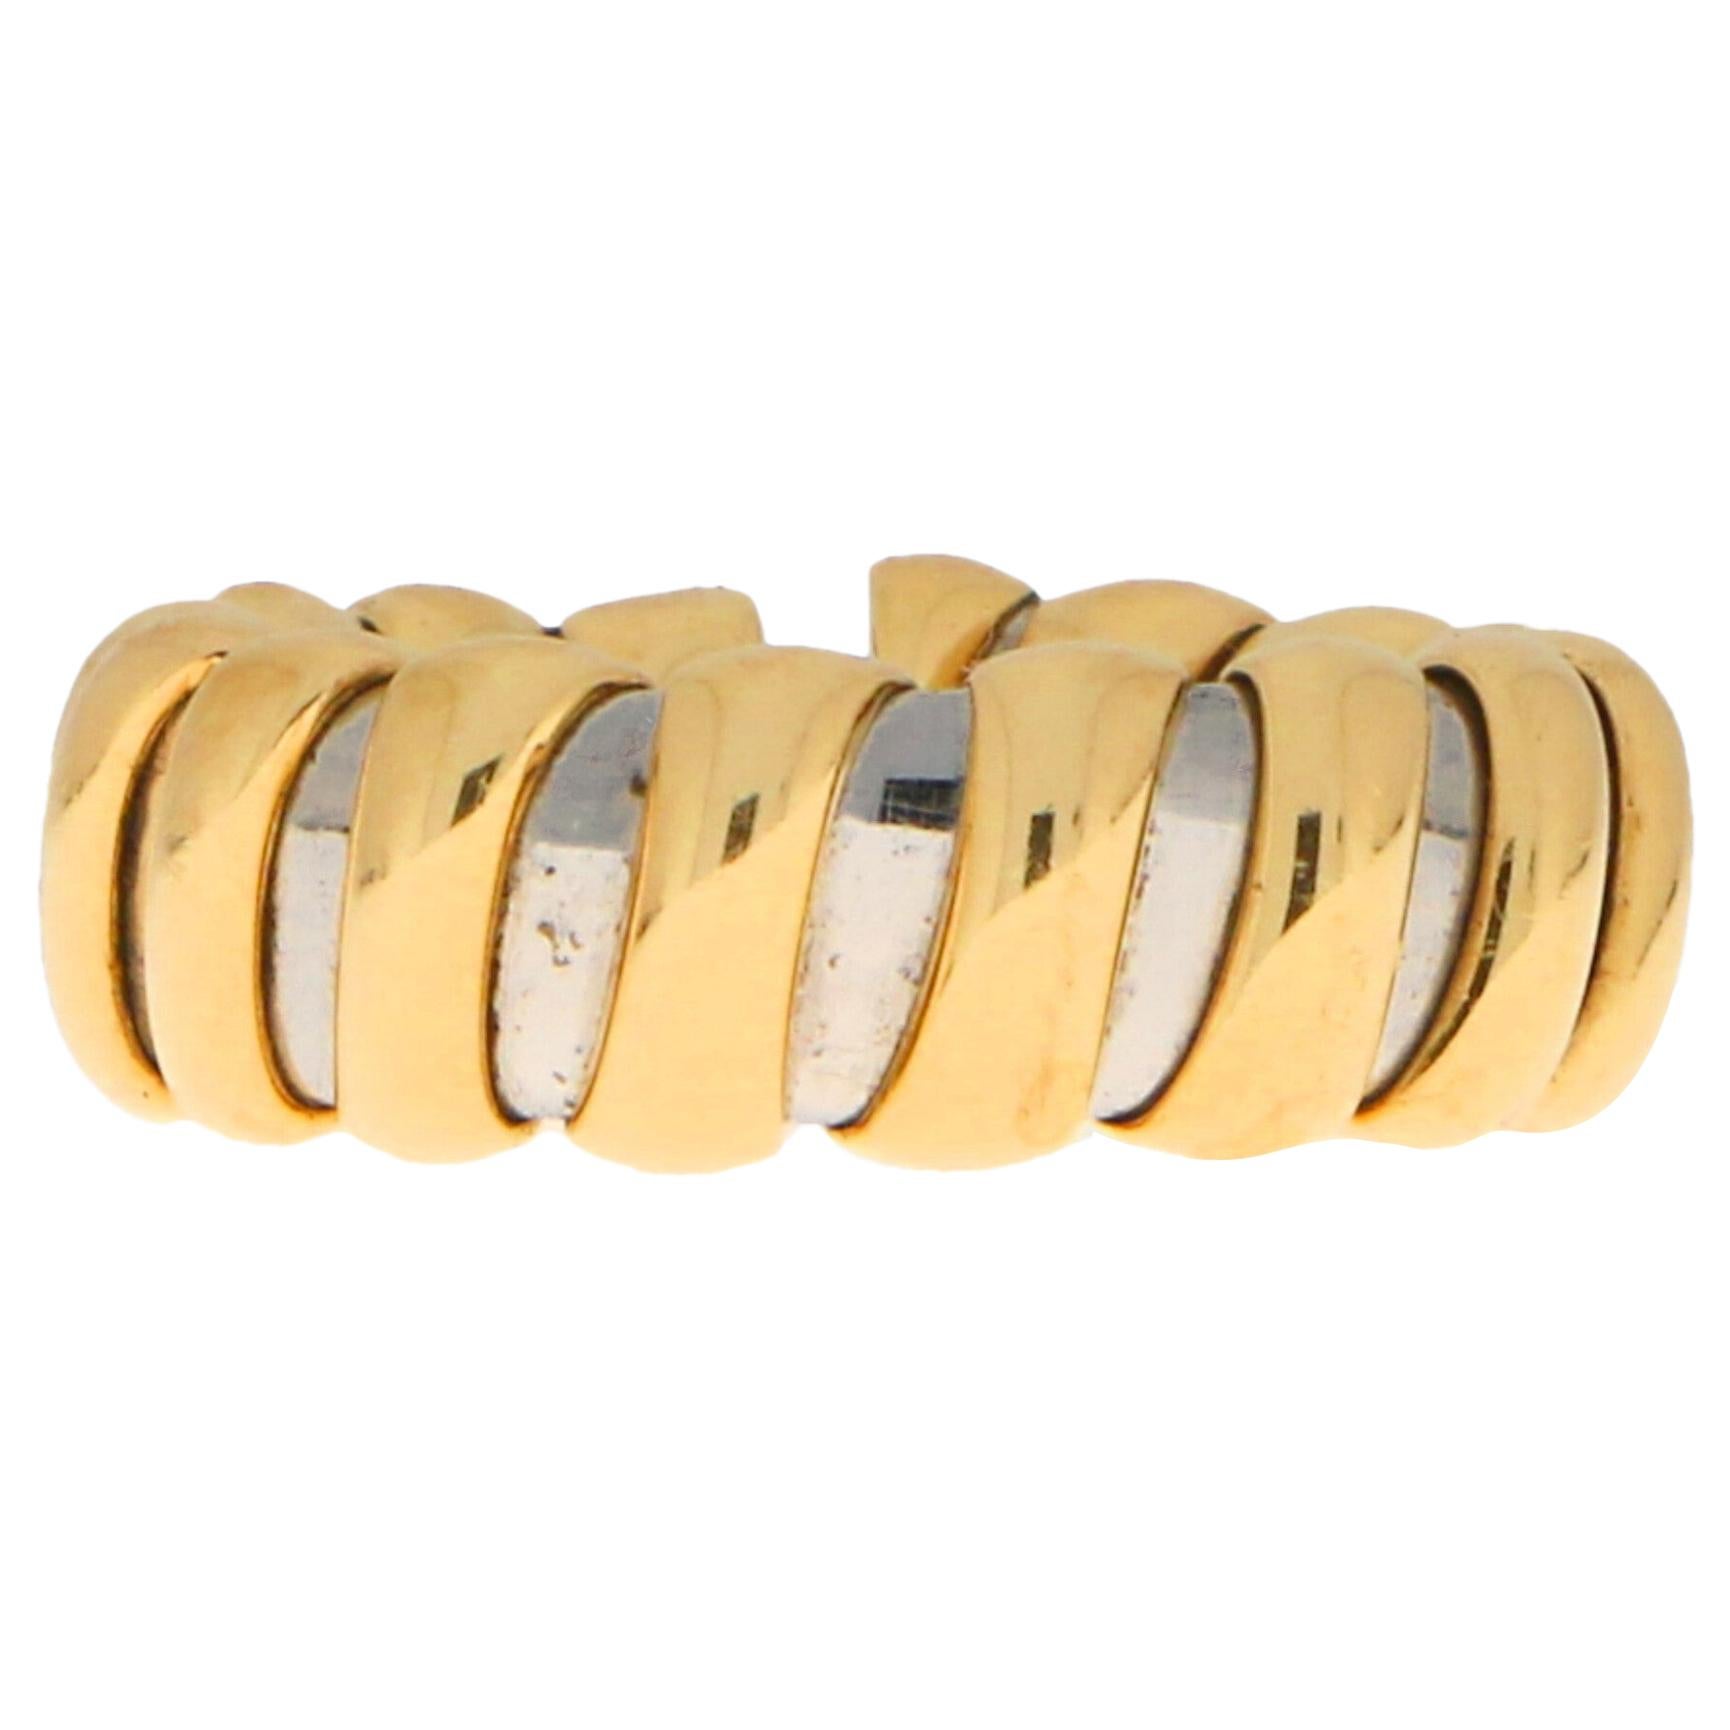 Bvlgari Tubogas Flexible Ring Set in 18 Karat Yellow Gold and Stainless Steel